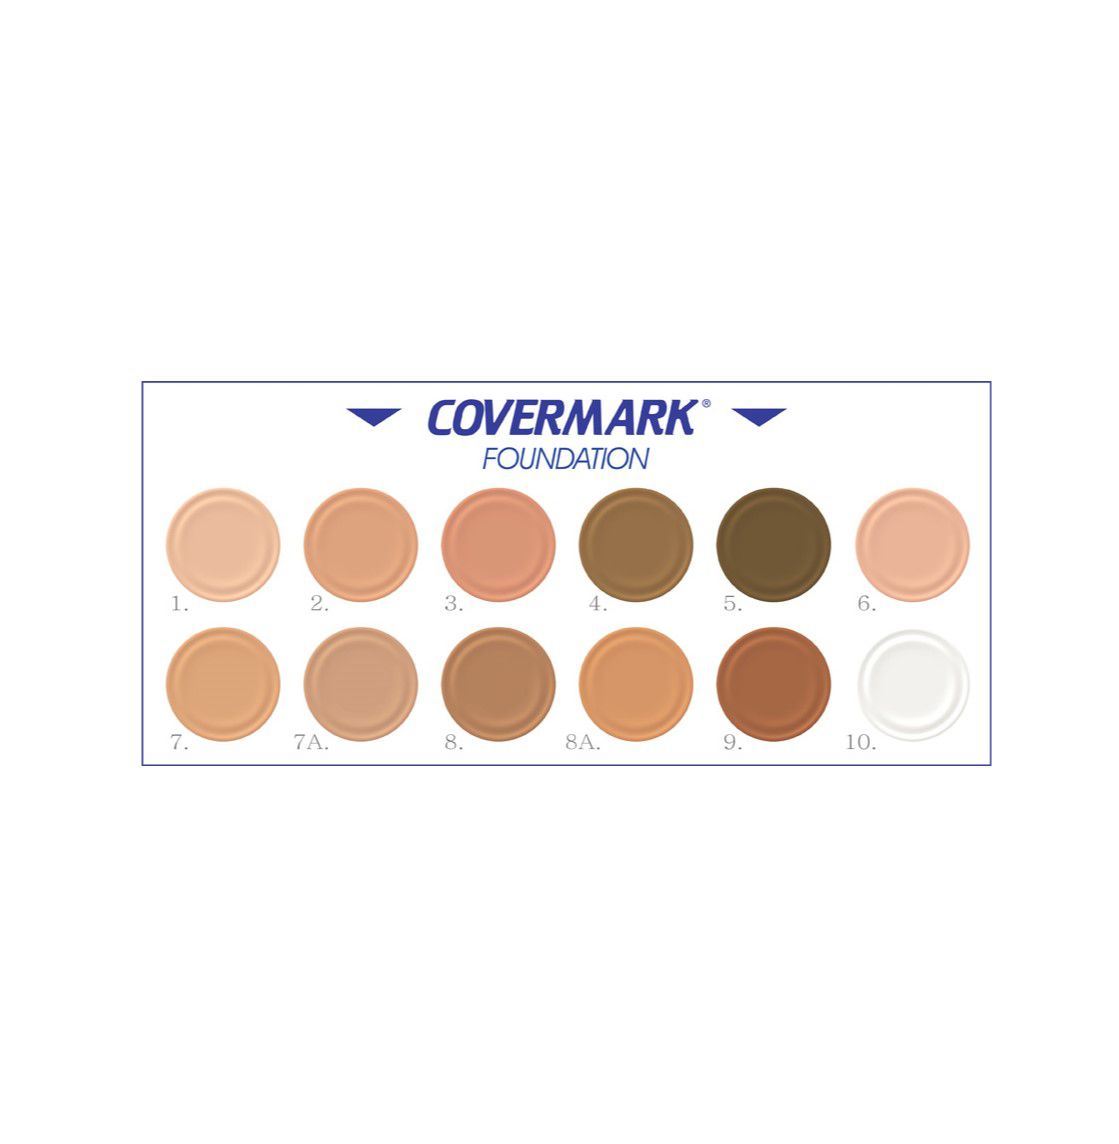 Kit Covermark Foundation - 12 cores, Pó Fixador, Primer e Removedor